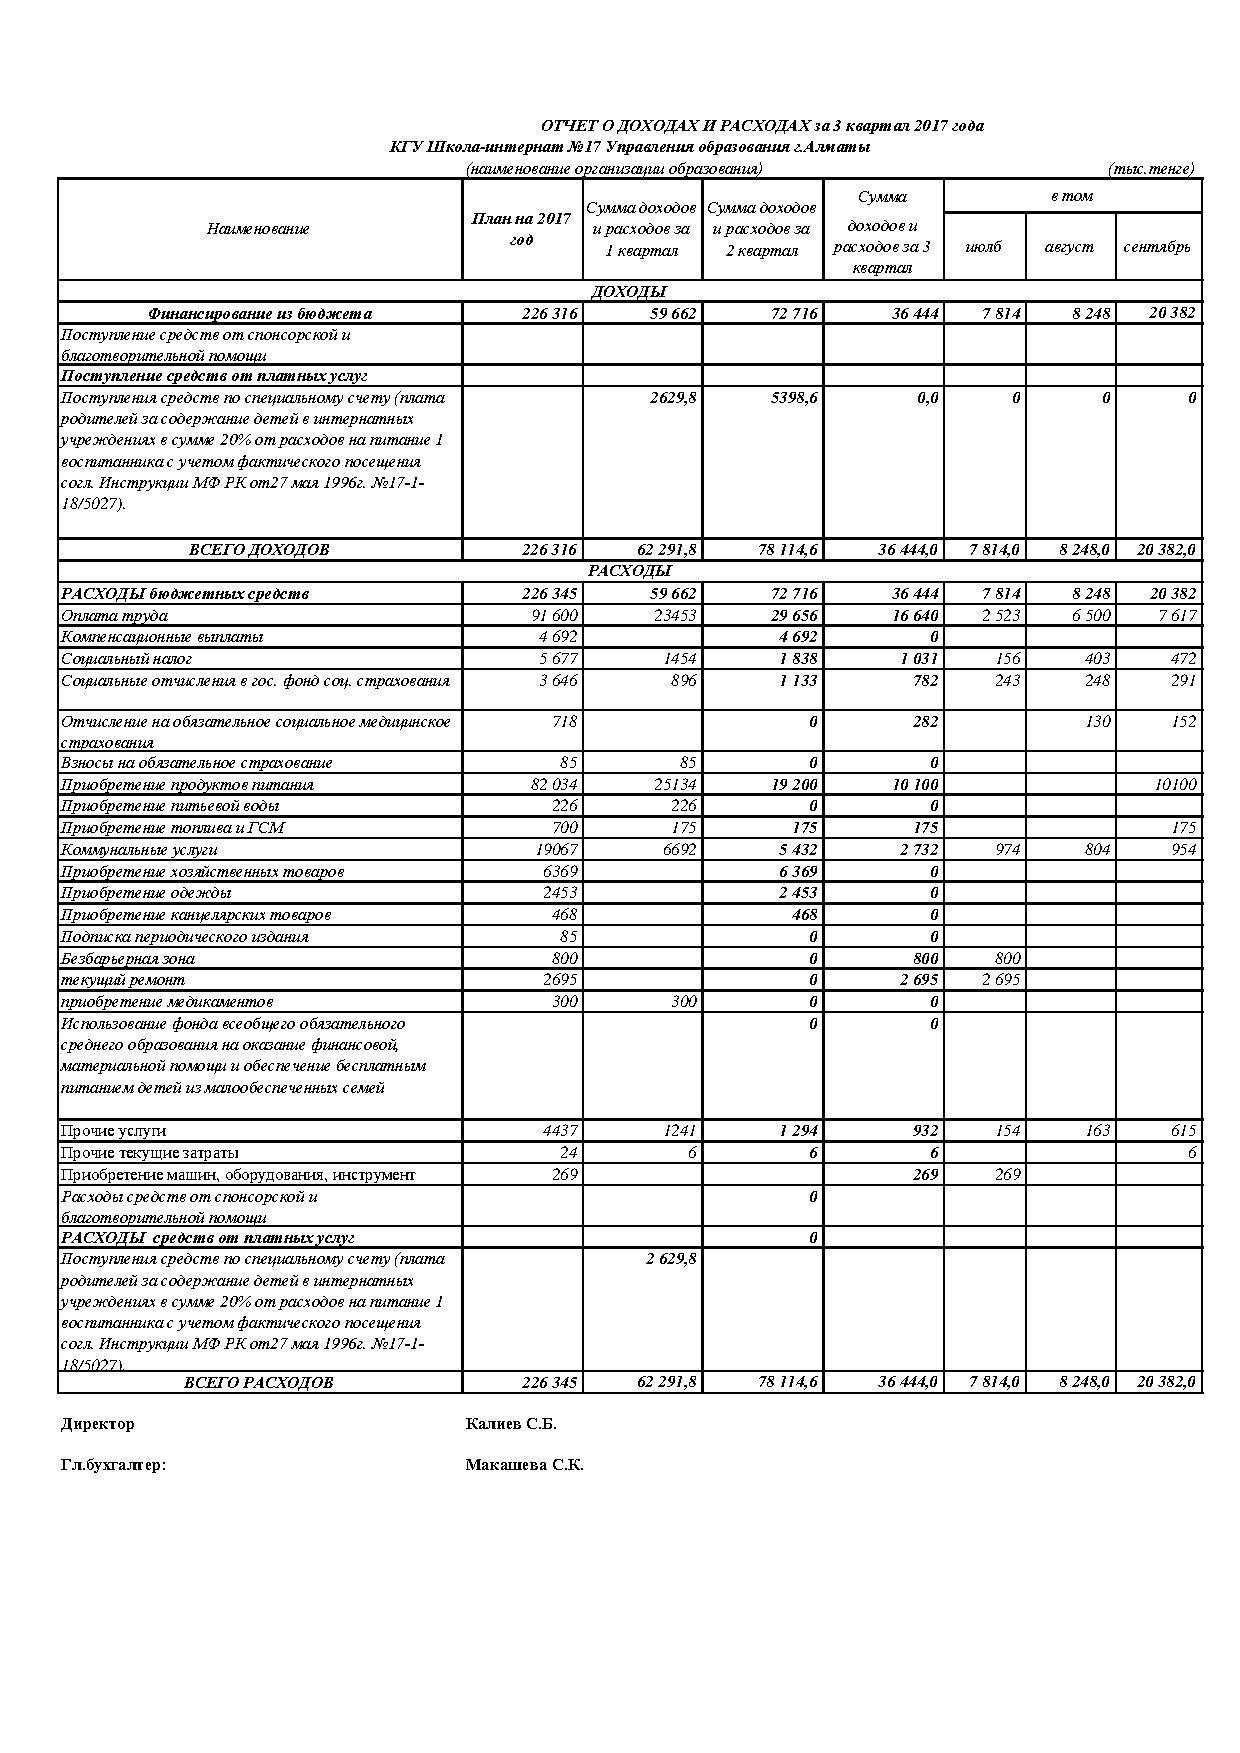 Отчет о доходах и расходах за 3 кв 2017